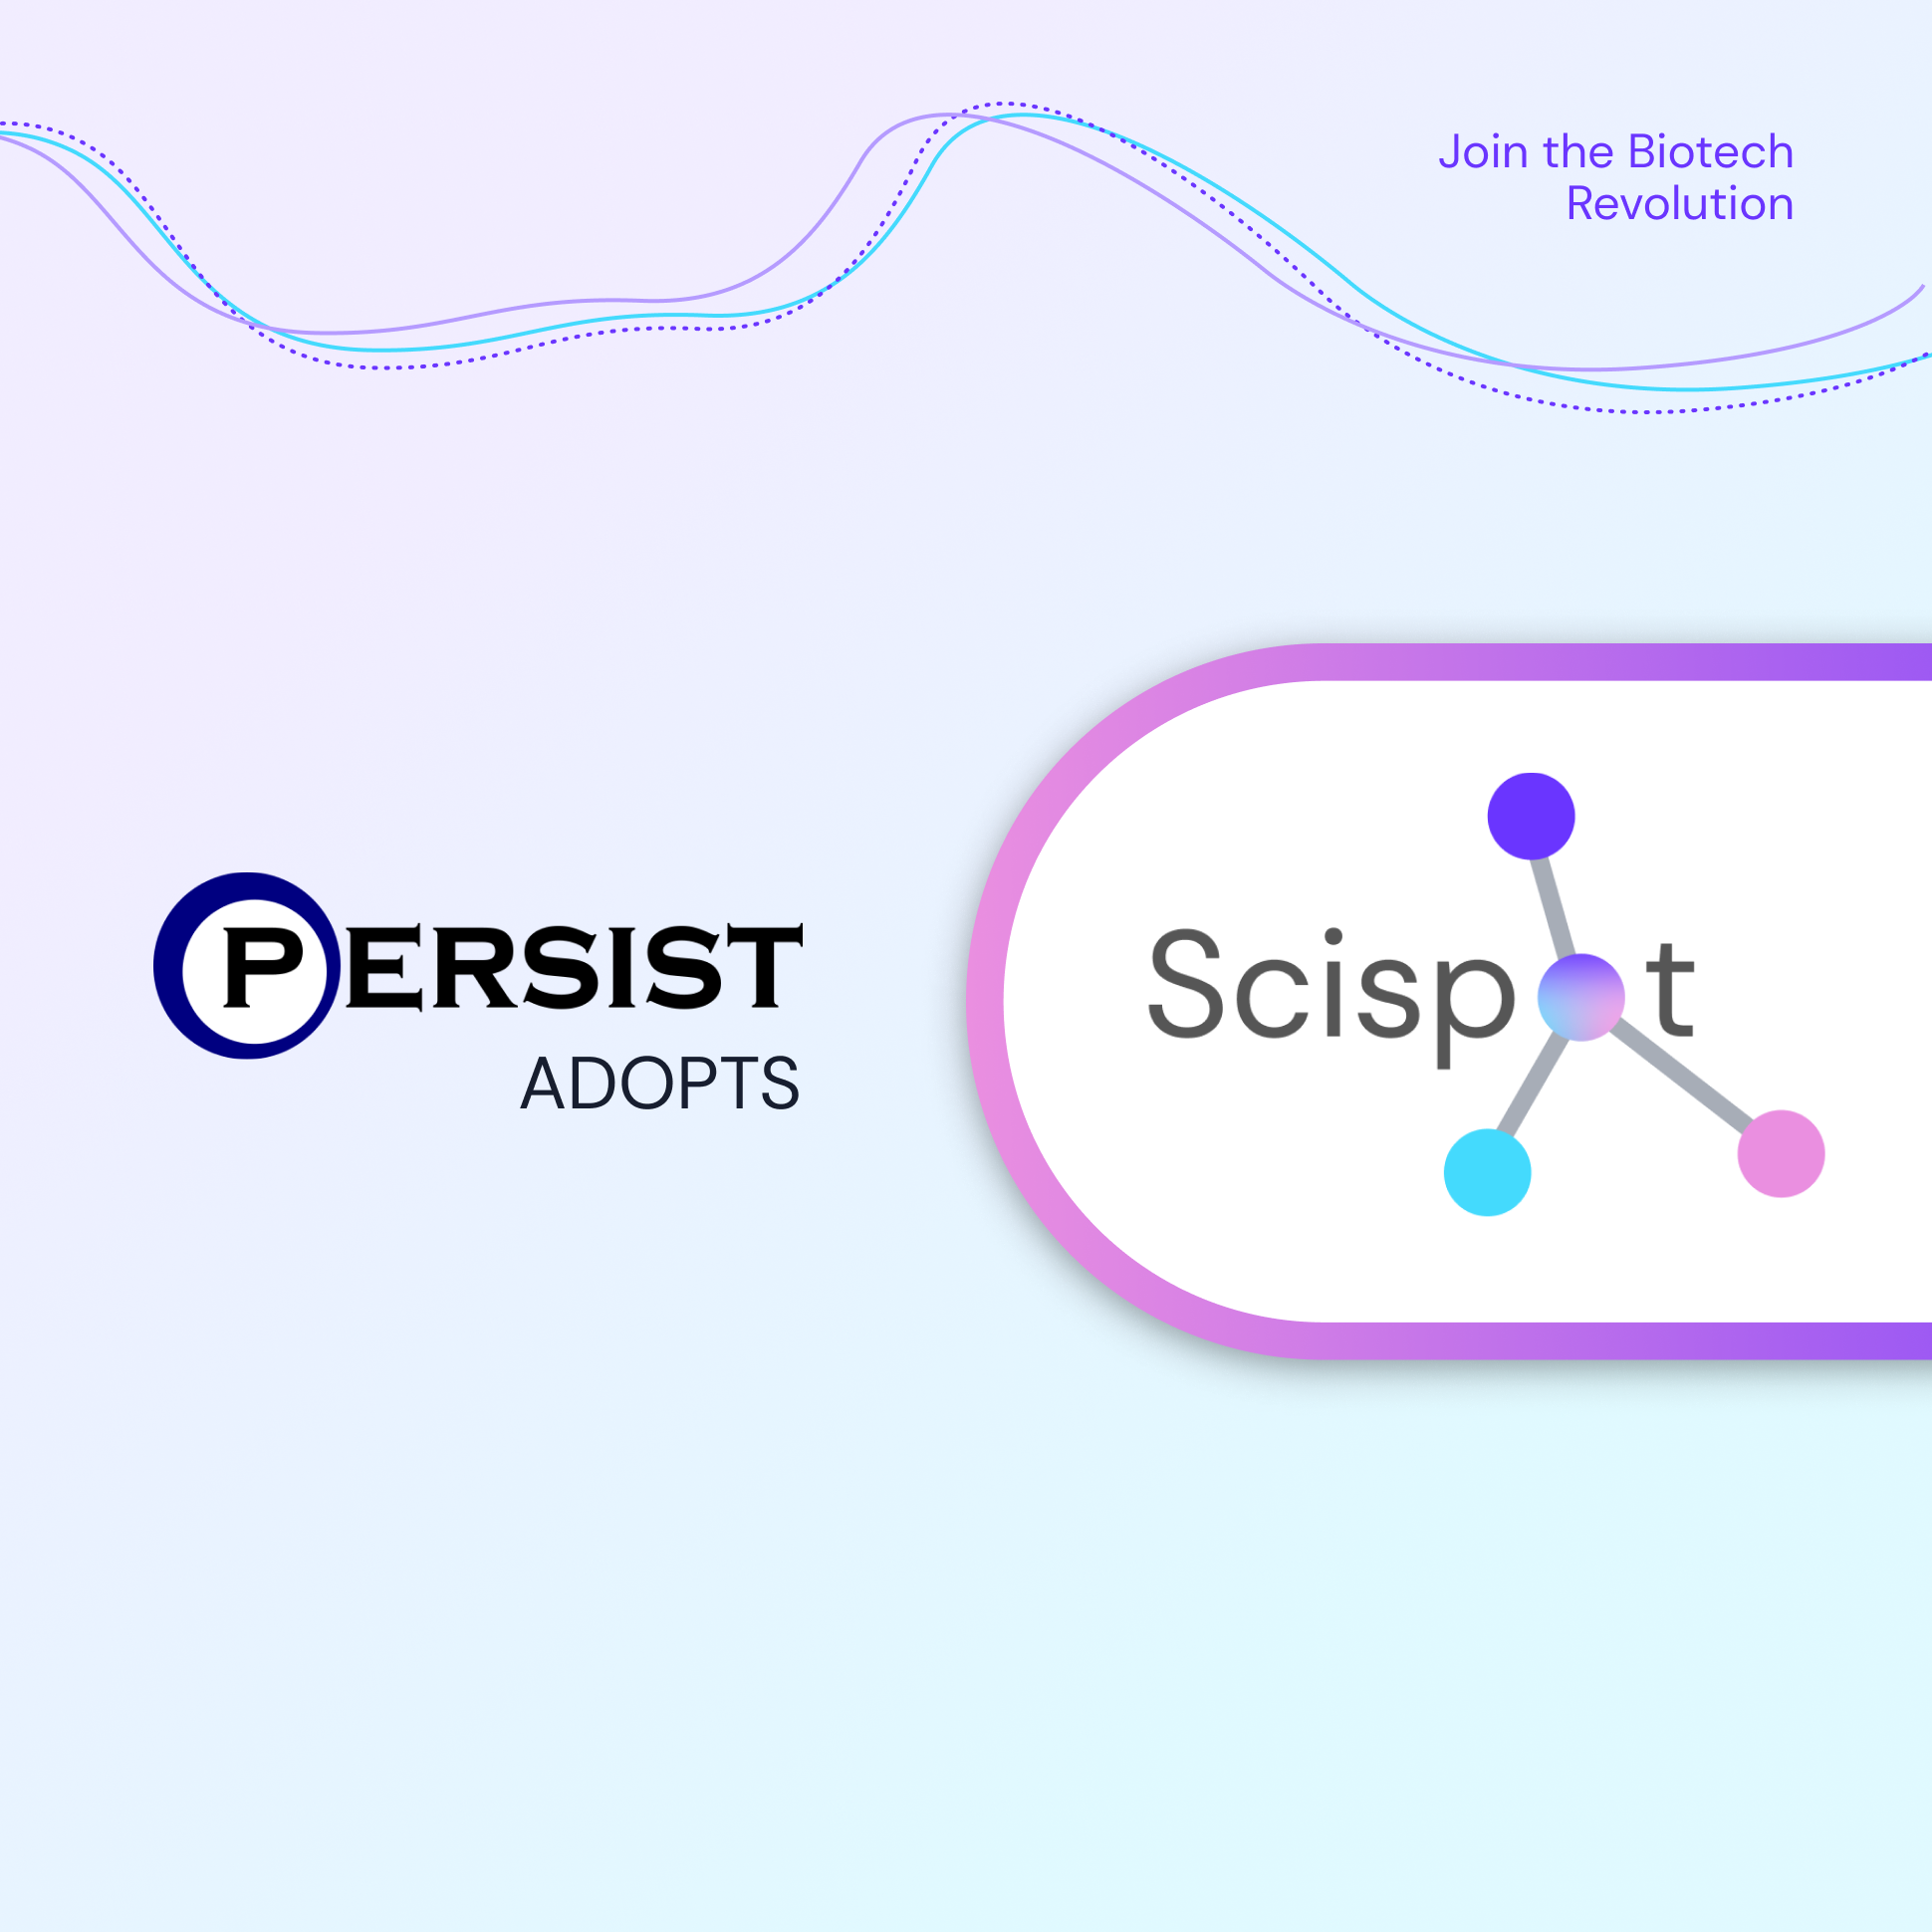 Persist AI Adopts Scispot to operate as a Digital Biotech company